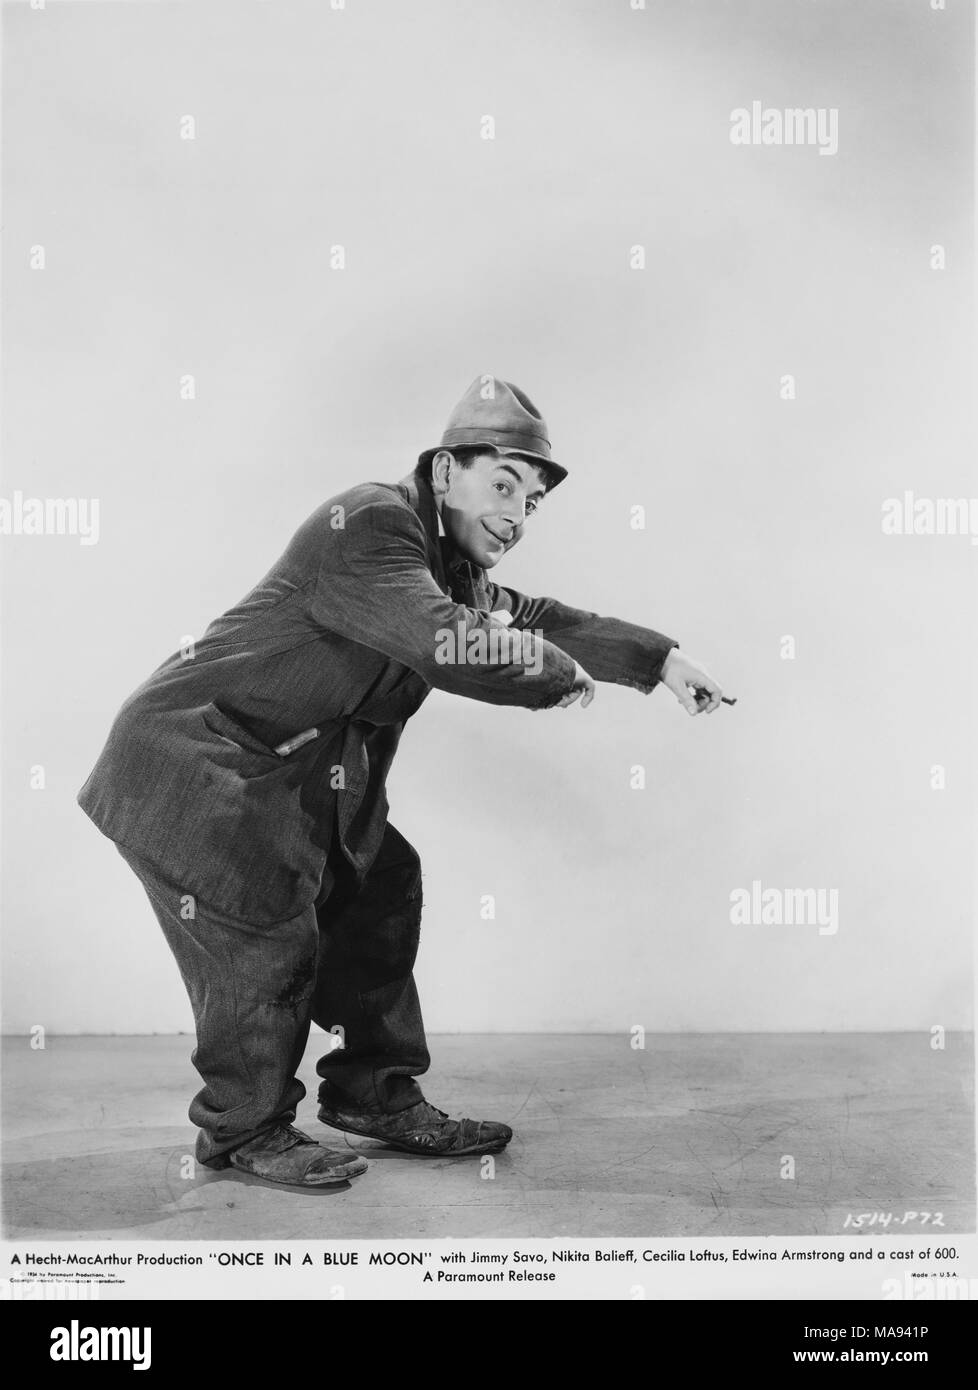 Jimmy Savo, Ritratto di pubblicità per i film, 'Una volta in una luna blu', Hecht-MacArthur Produzione, Paramount Pictures, 1935 Foto Stock